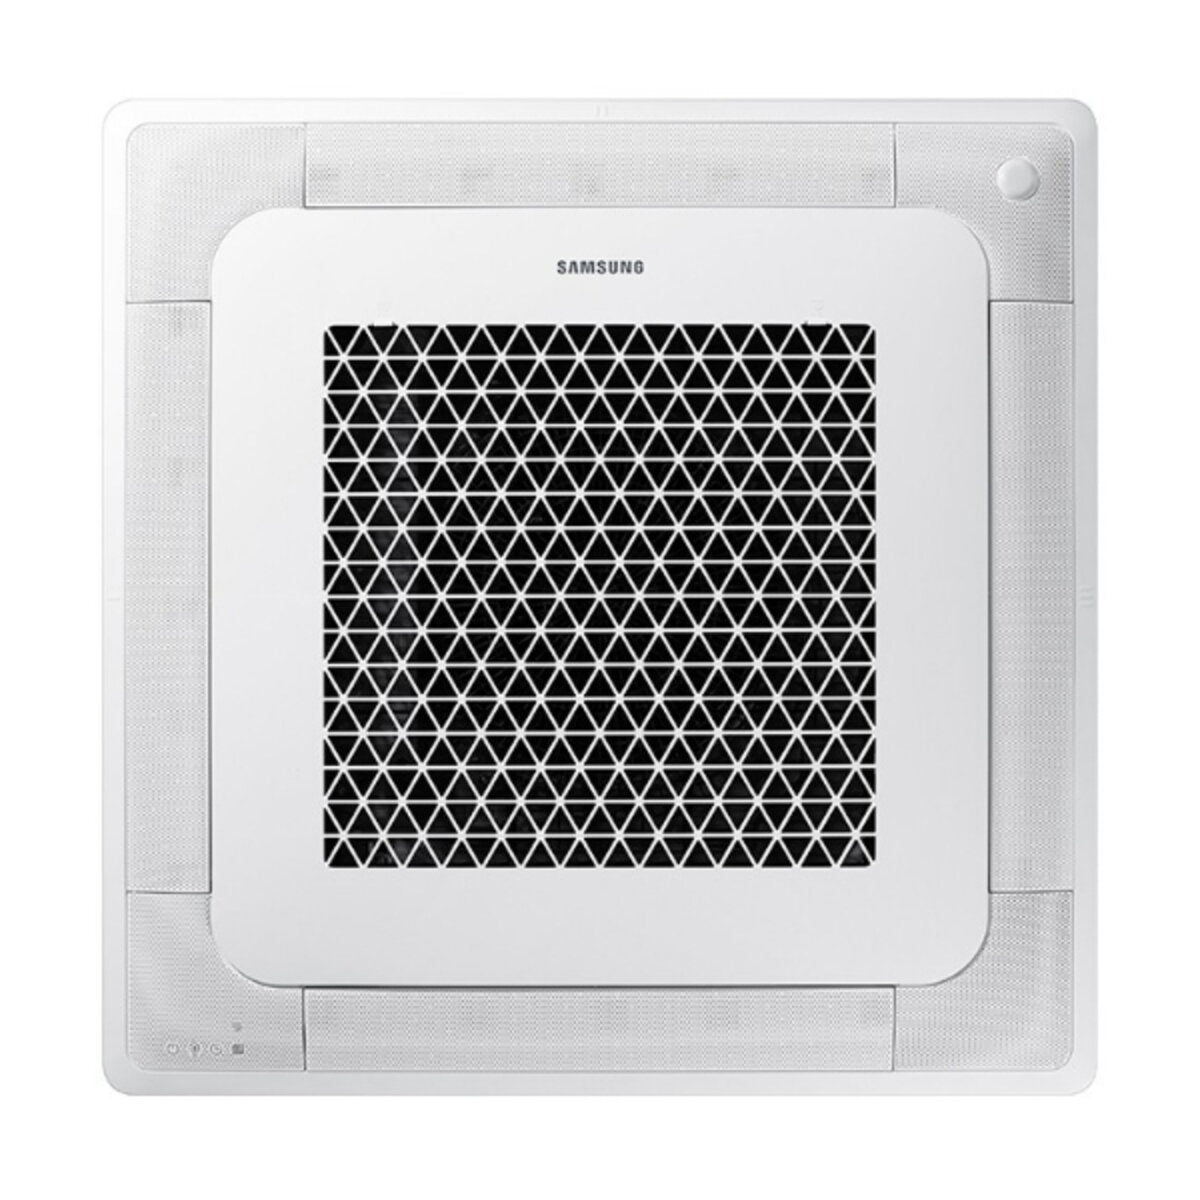 Samsung Klimagerät Windfree 4-Wege Trial Split 18000 + 18000 + 18000 BTU Inverter A++ Außengerät 10,0 kW